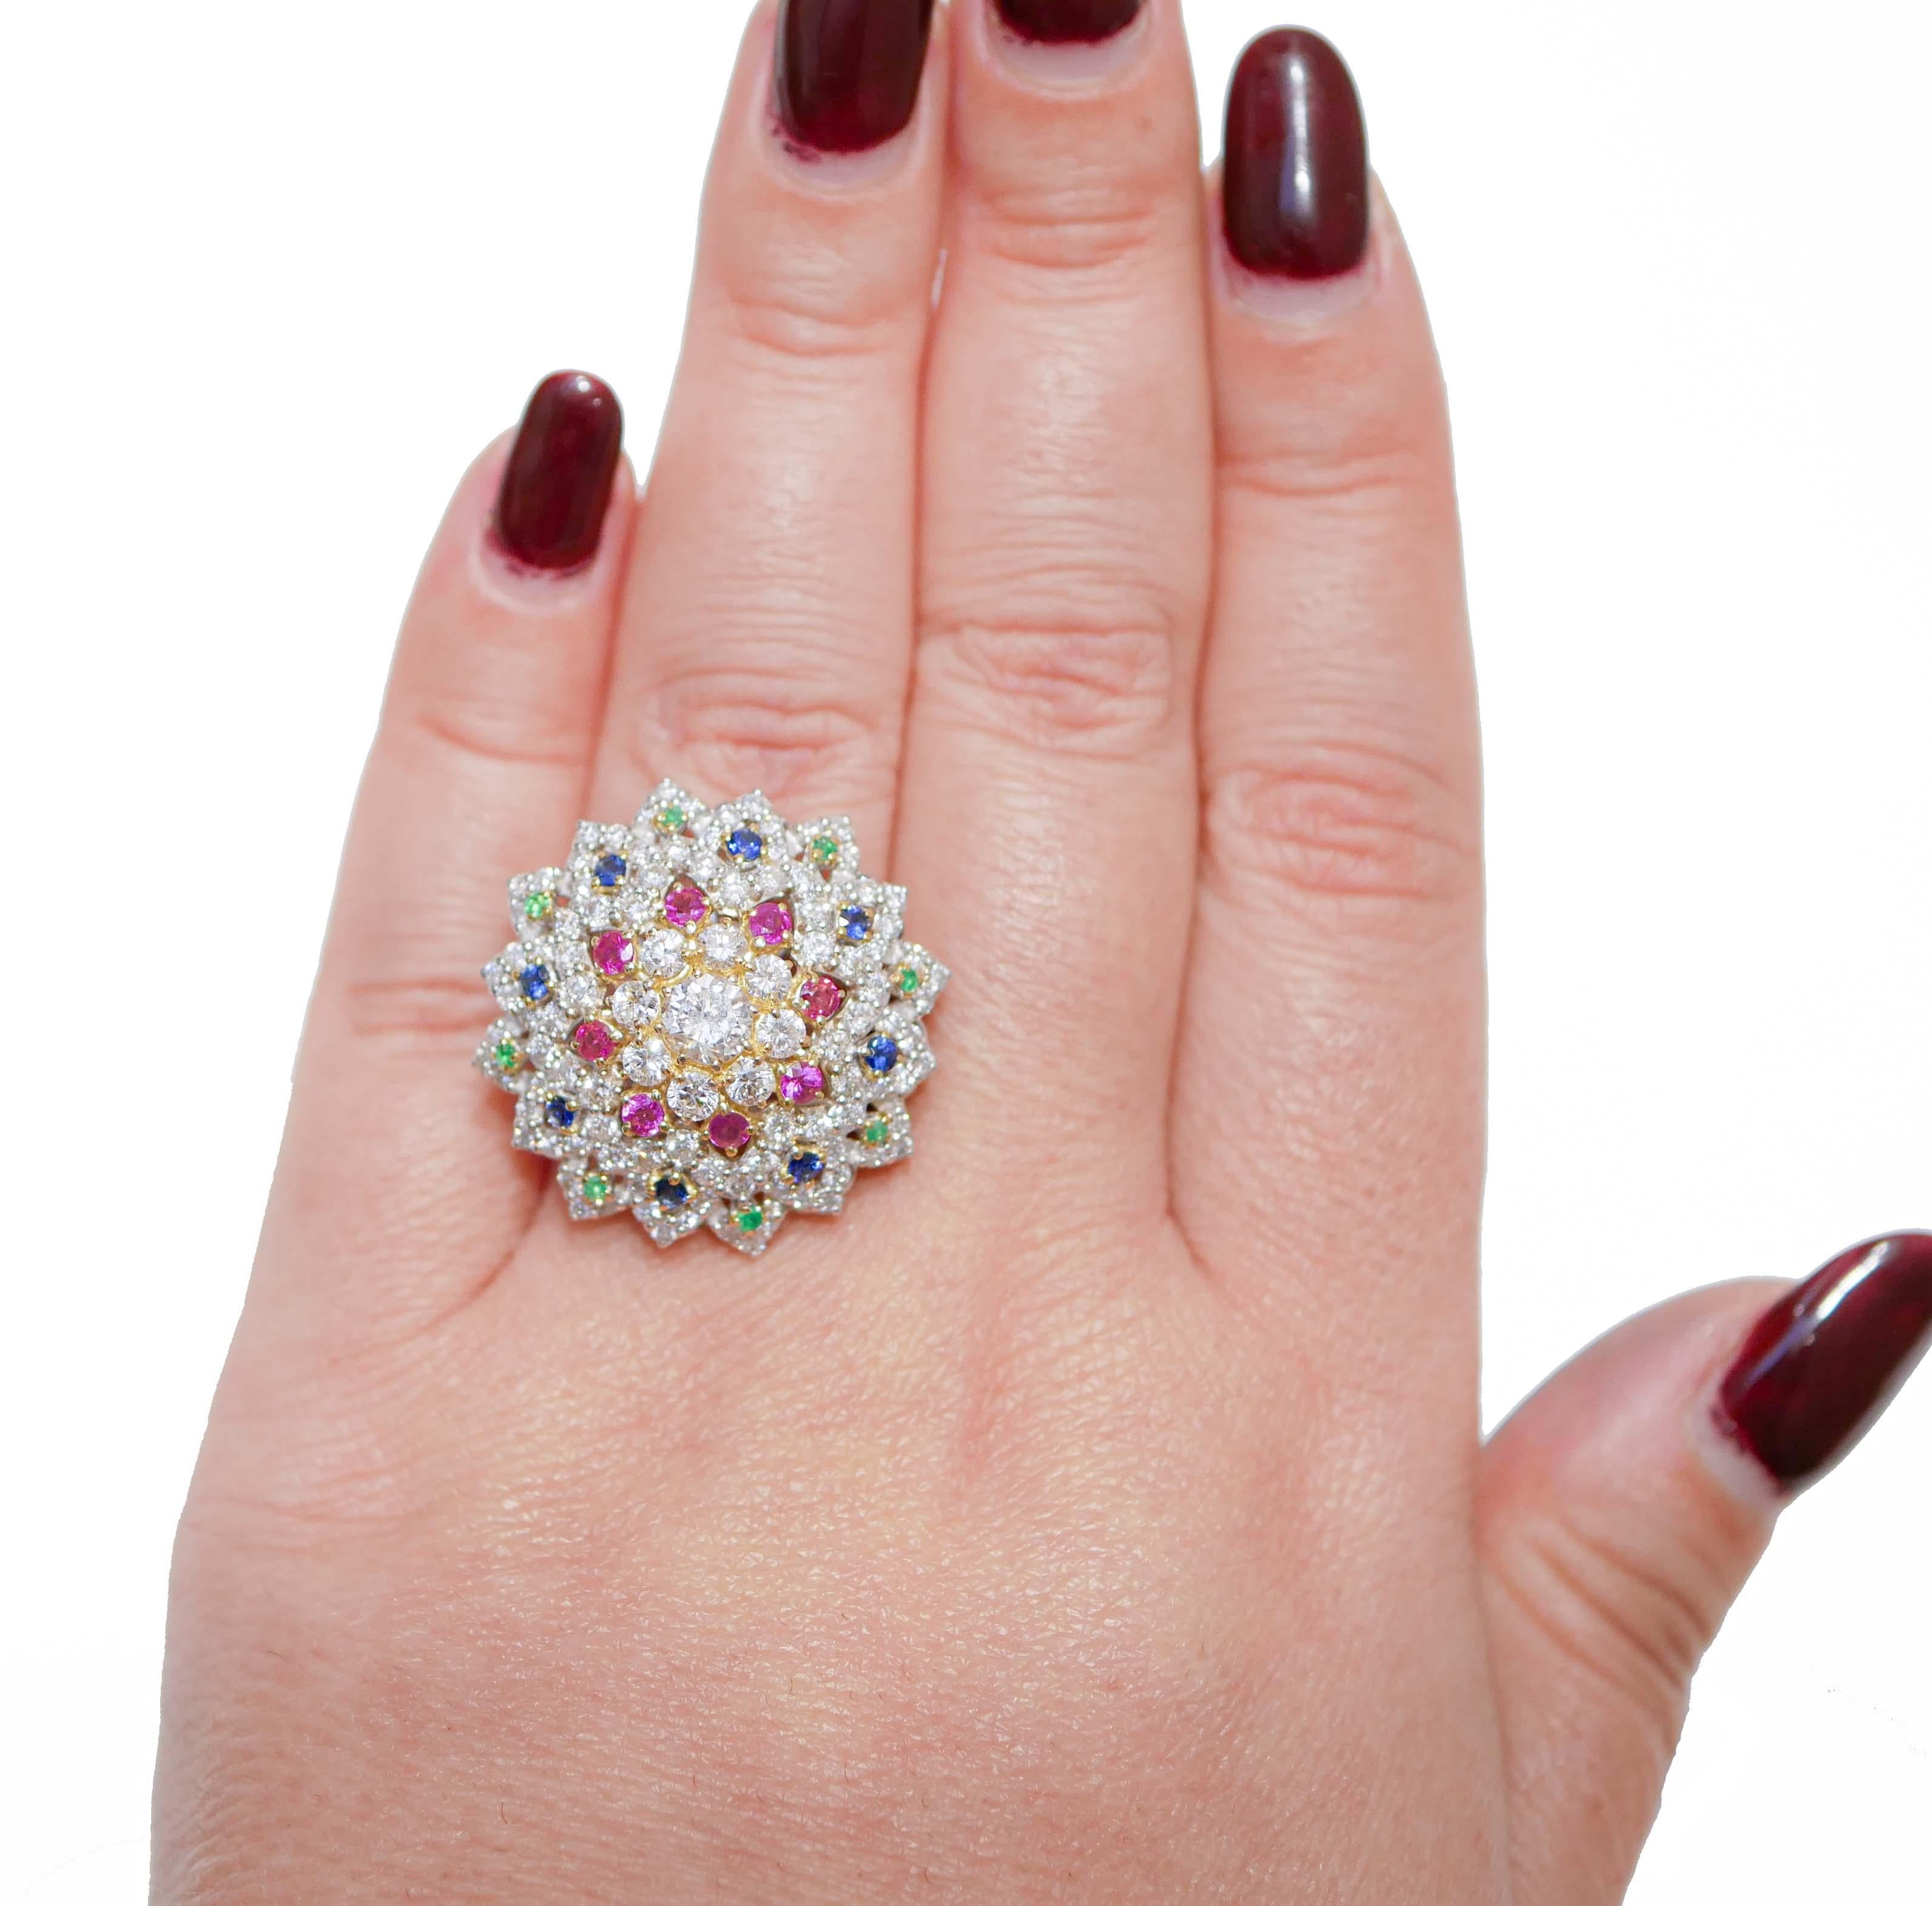 Mixed Cut Sapphires, Rubies, Emeralds, Diamonds, 18 Karat White Gold Ring. For Sale